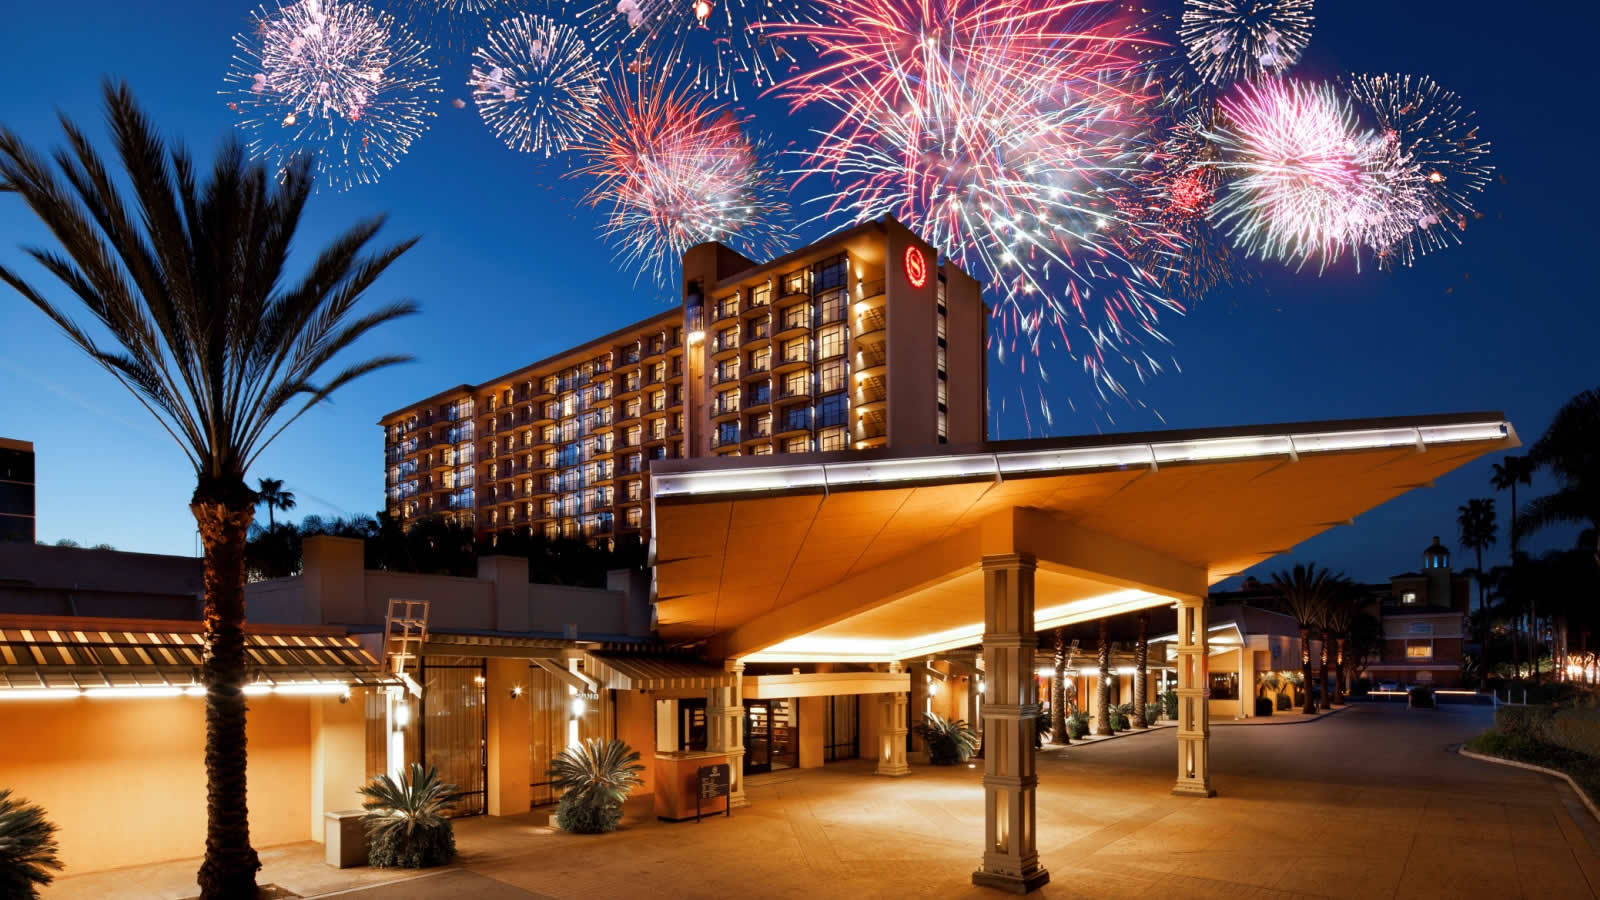 Photo of Sheraton Park Hotel at the Anaheim Resort, Anaheim, CA